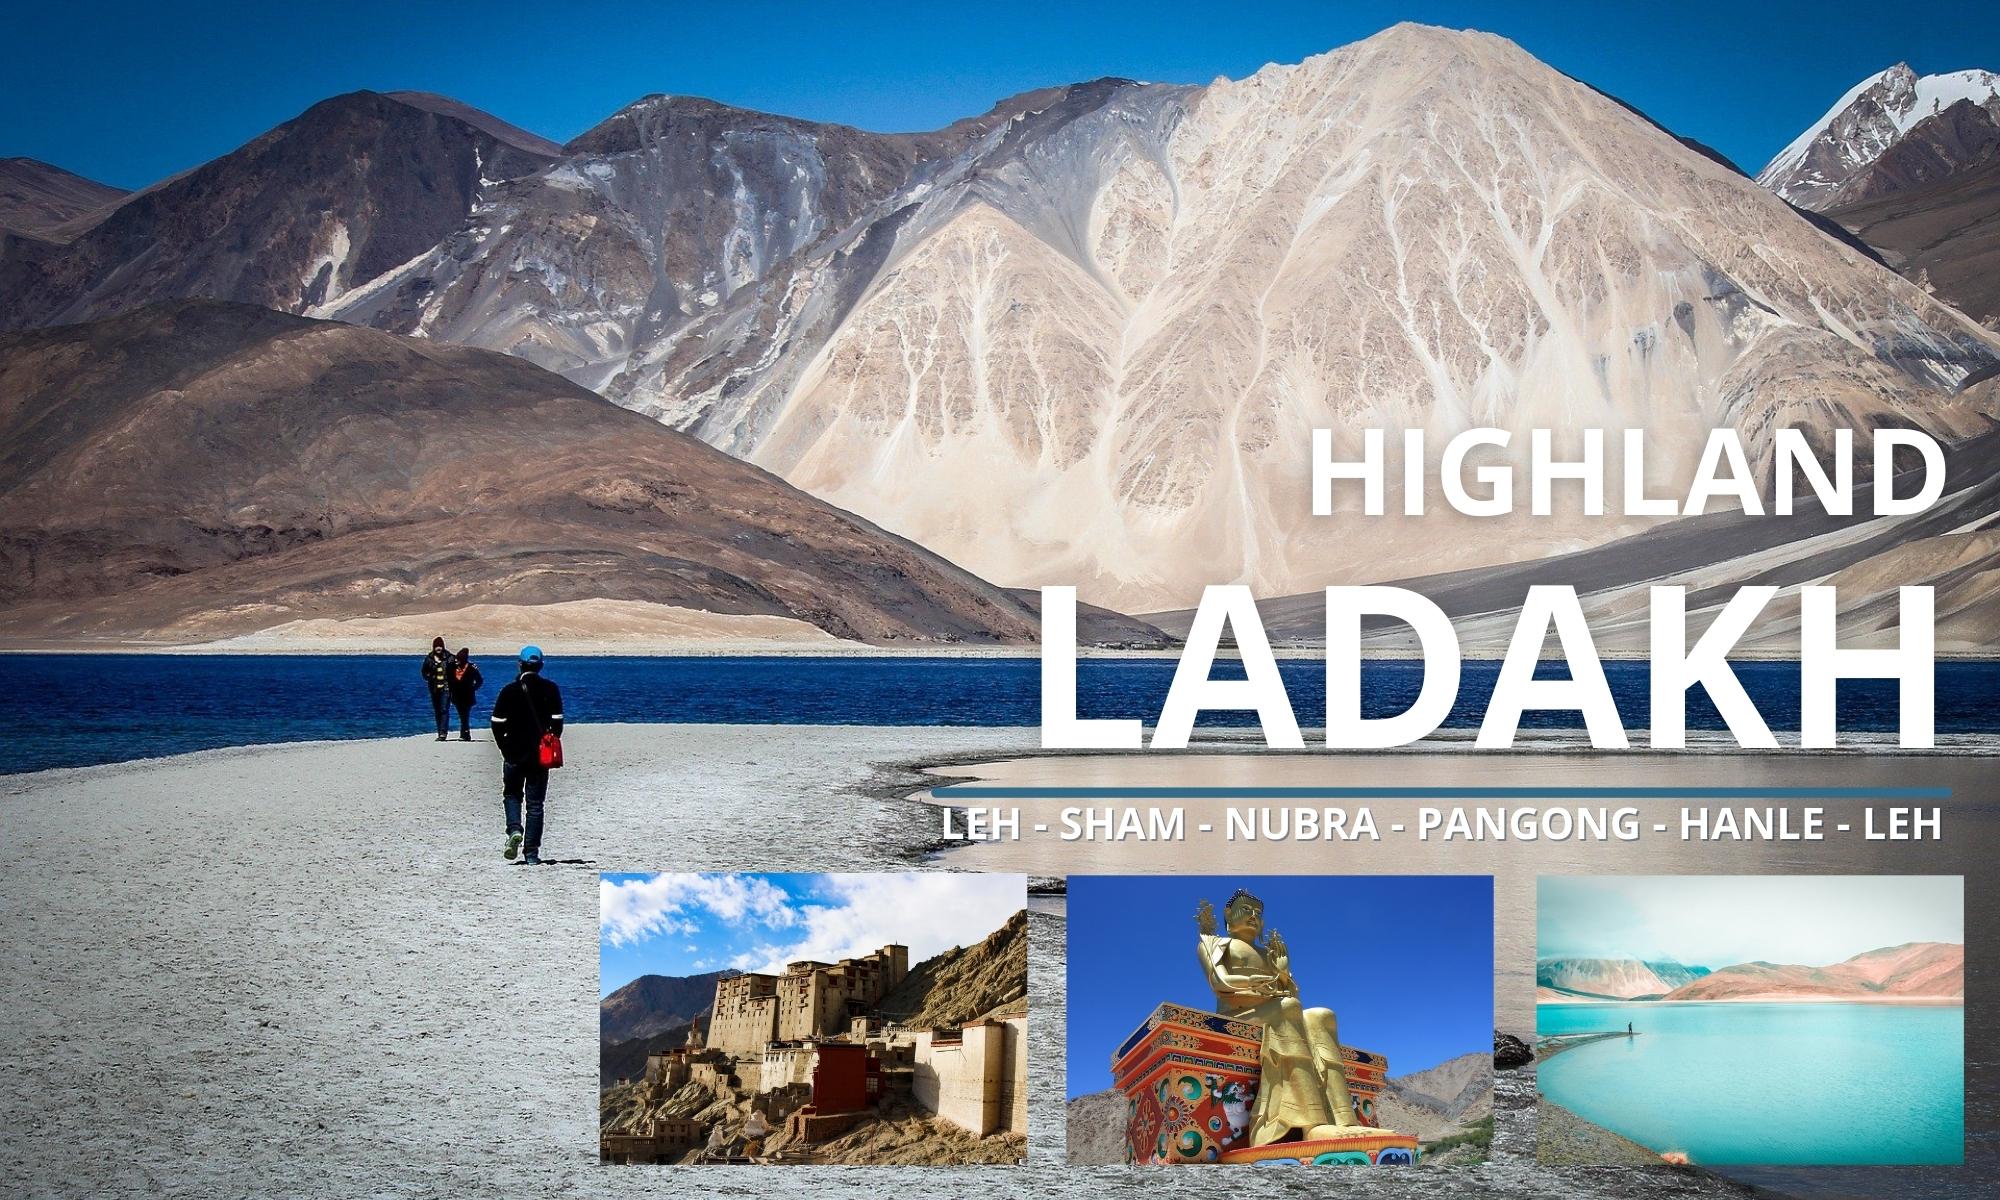 highland ladakh tour package